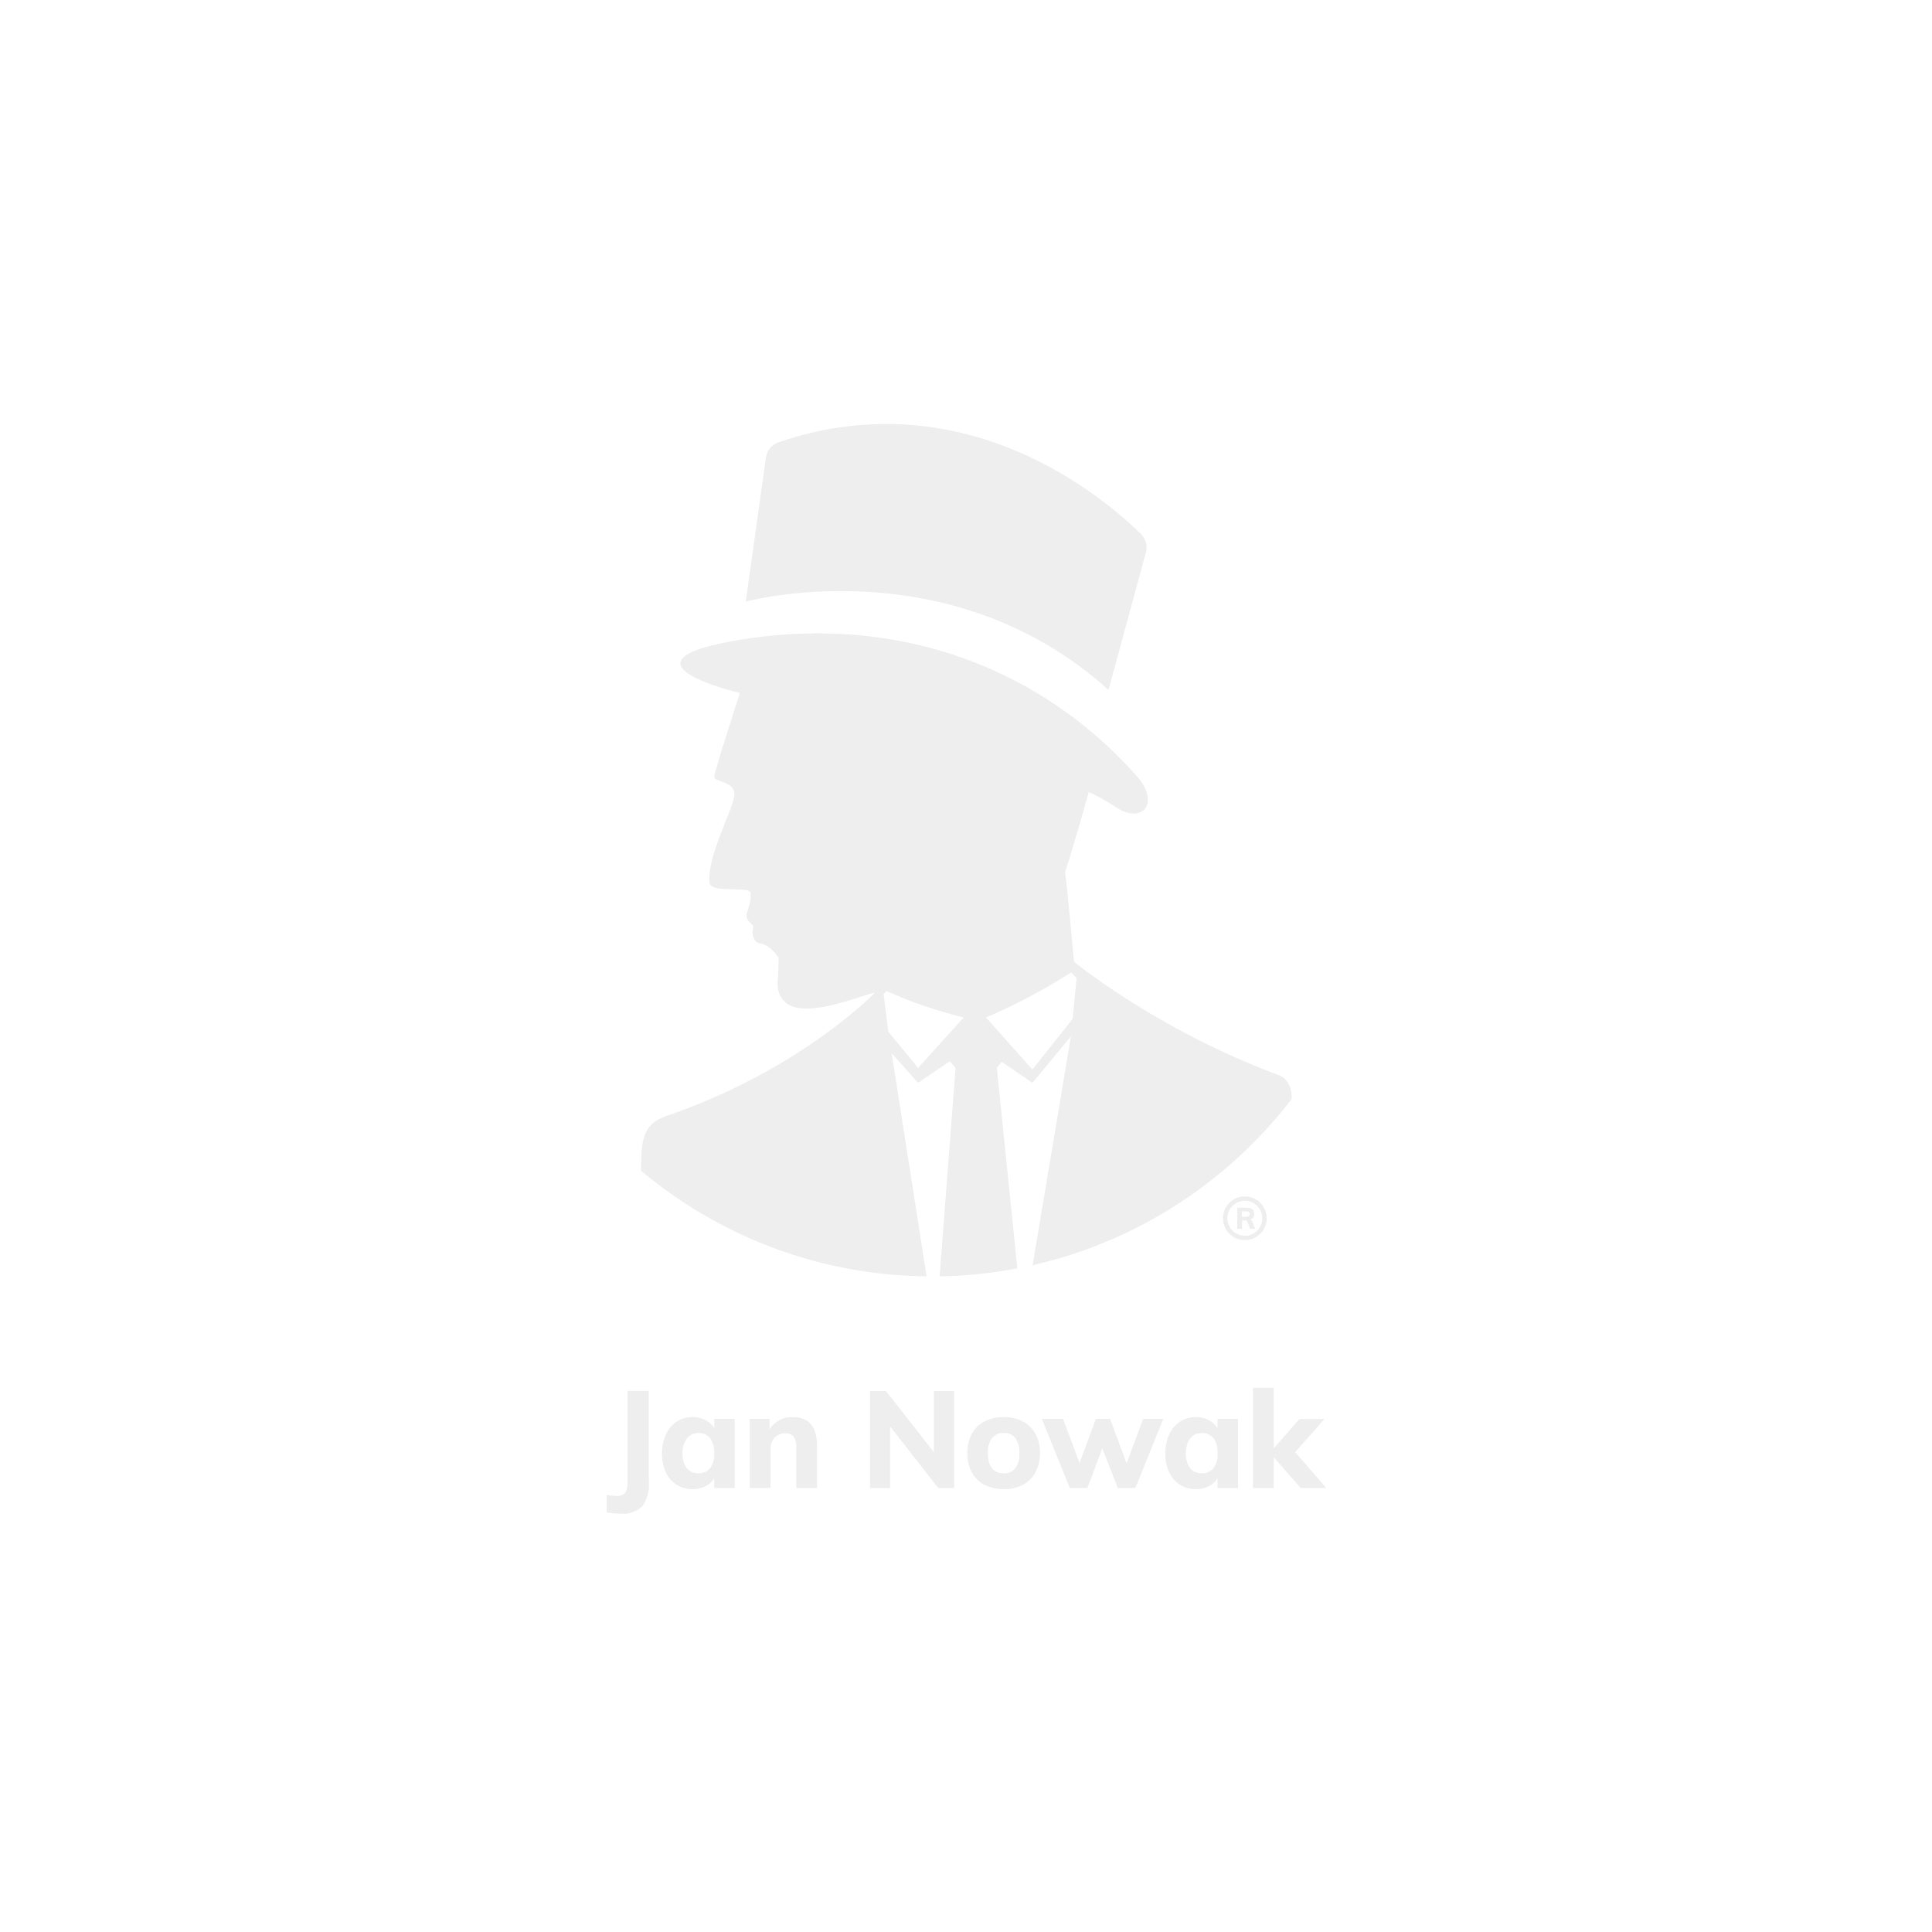 JAN NOWAK model TOMASZ 900x1850x450 biurowa szafa metalowa na akta: szara